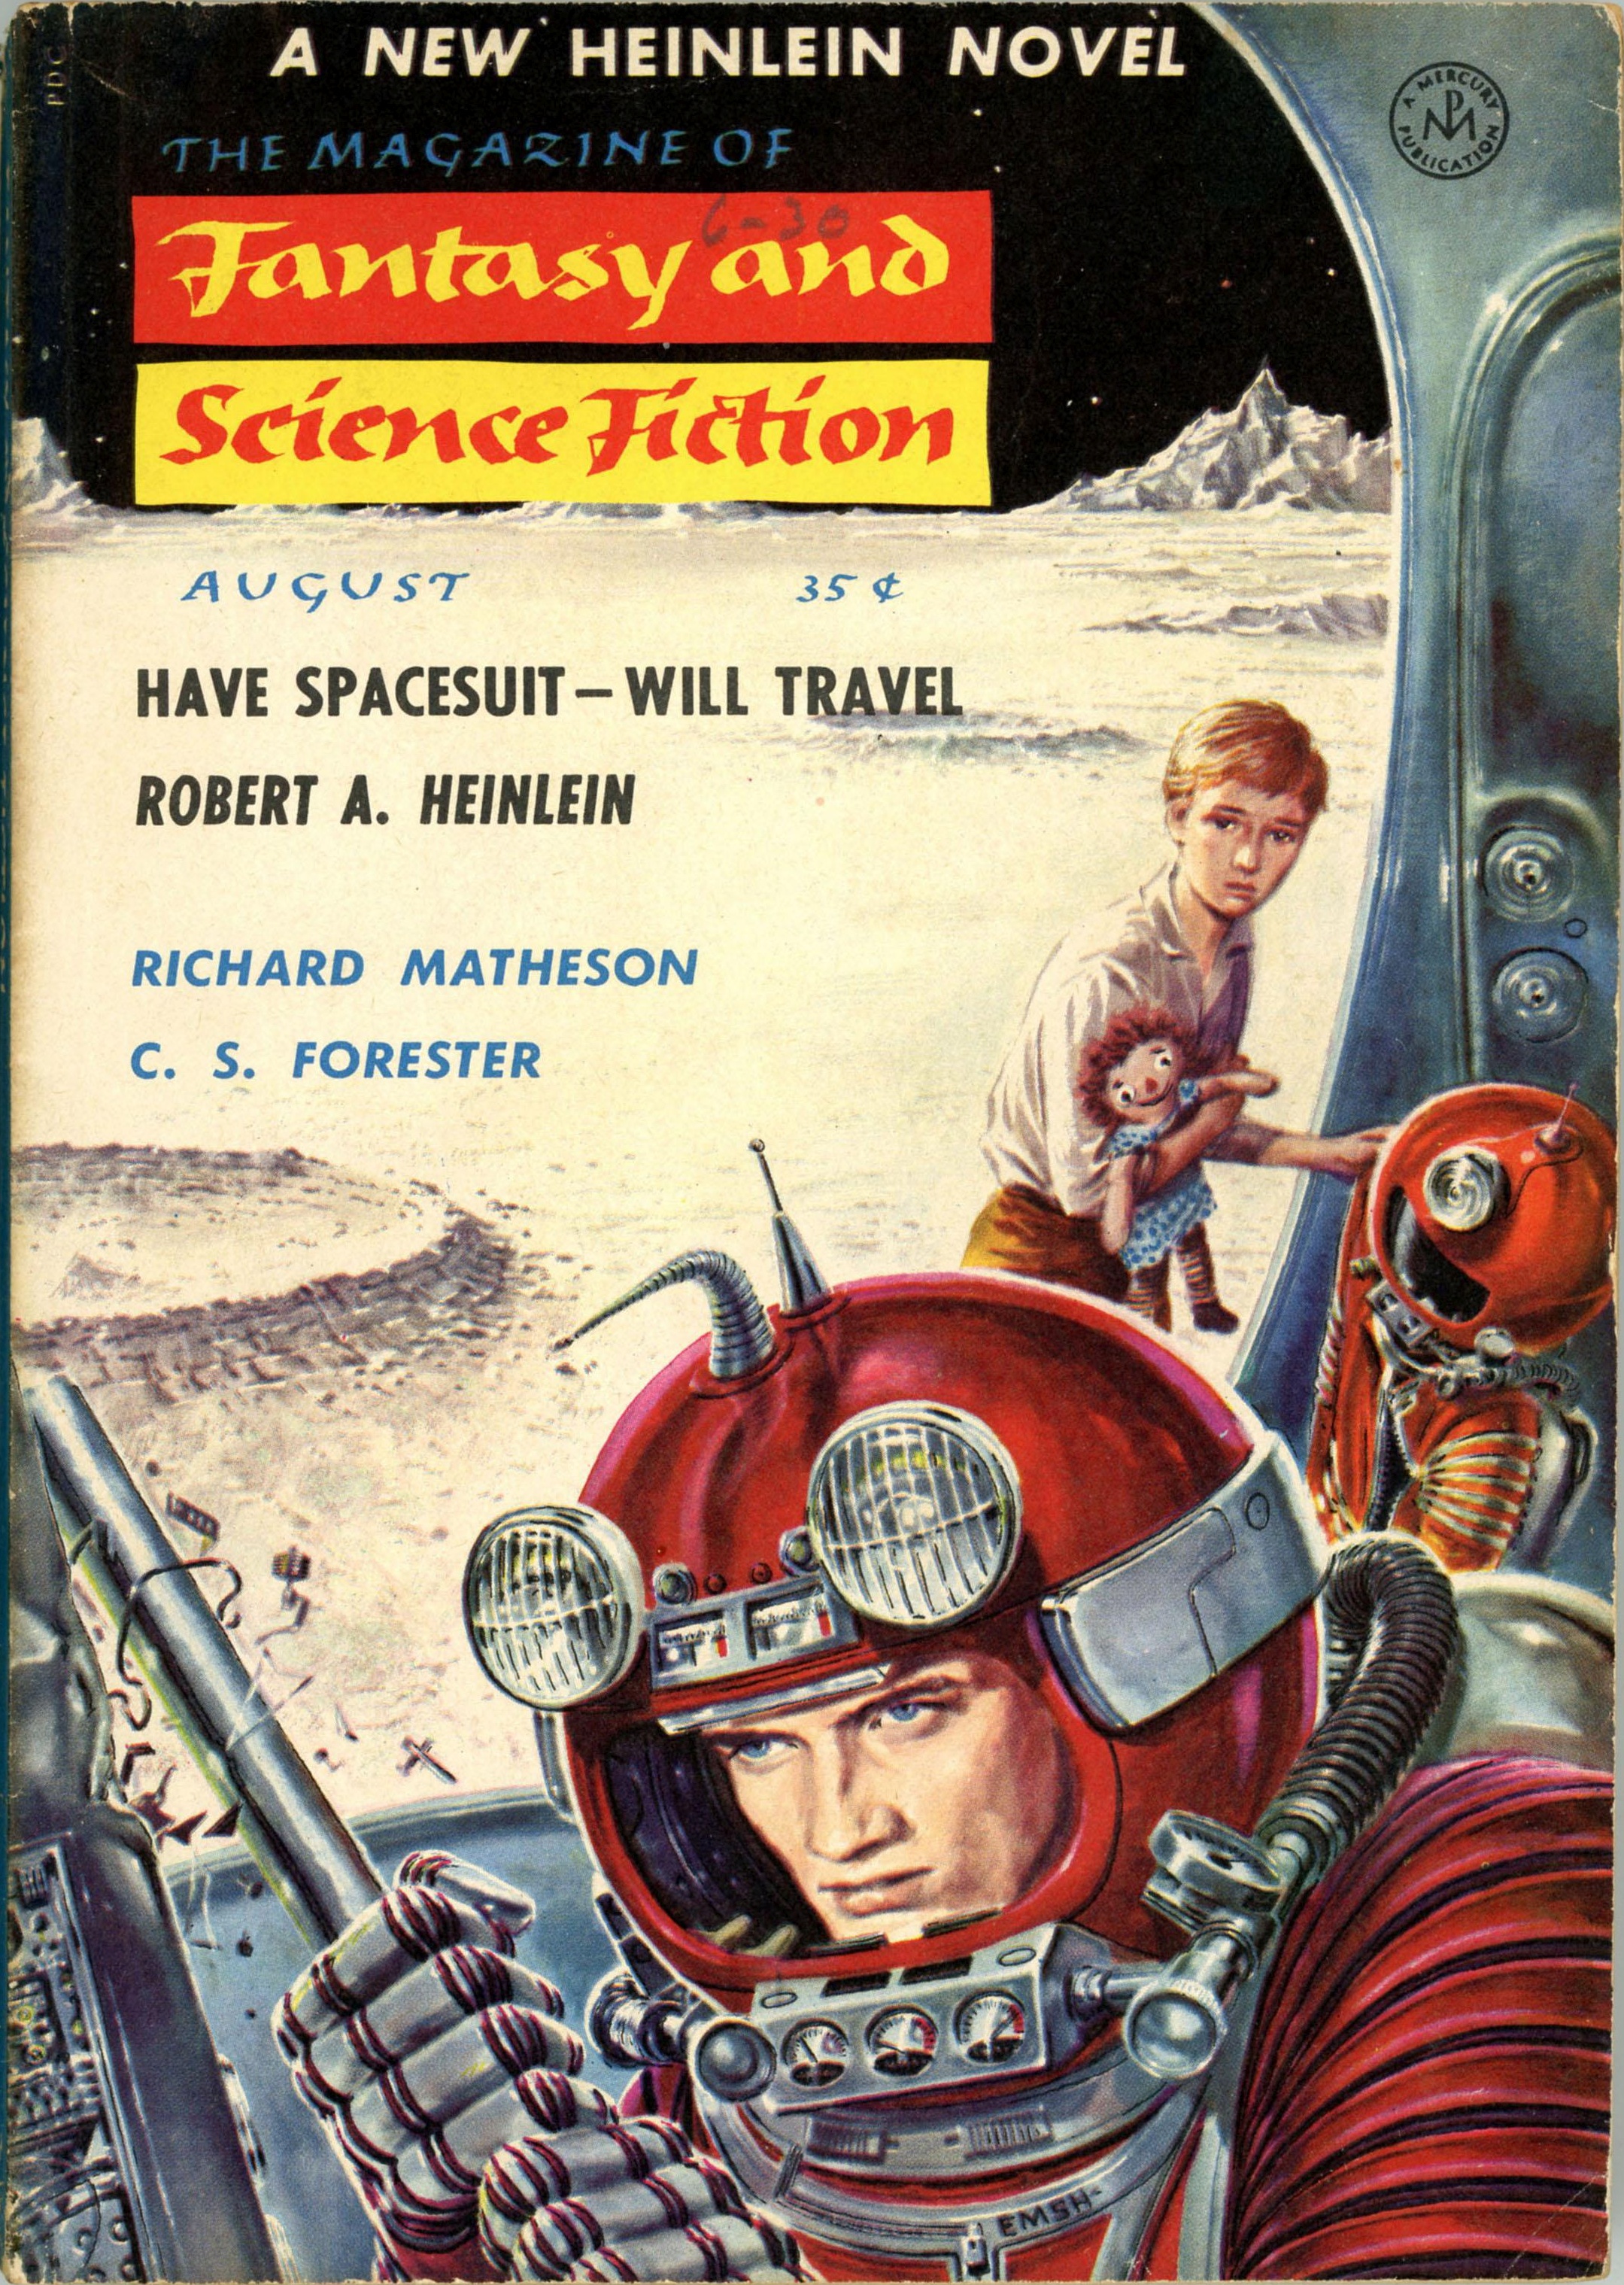 Книга скафандр. Have spacesuit-will Travel иллюстрации.